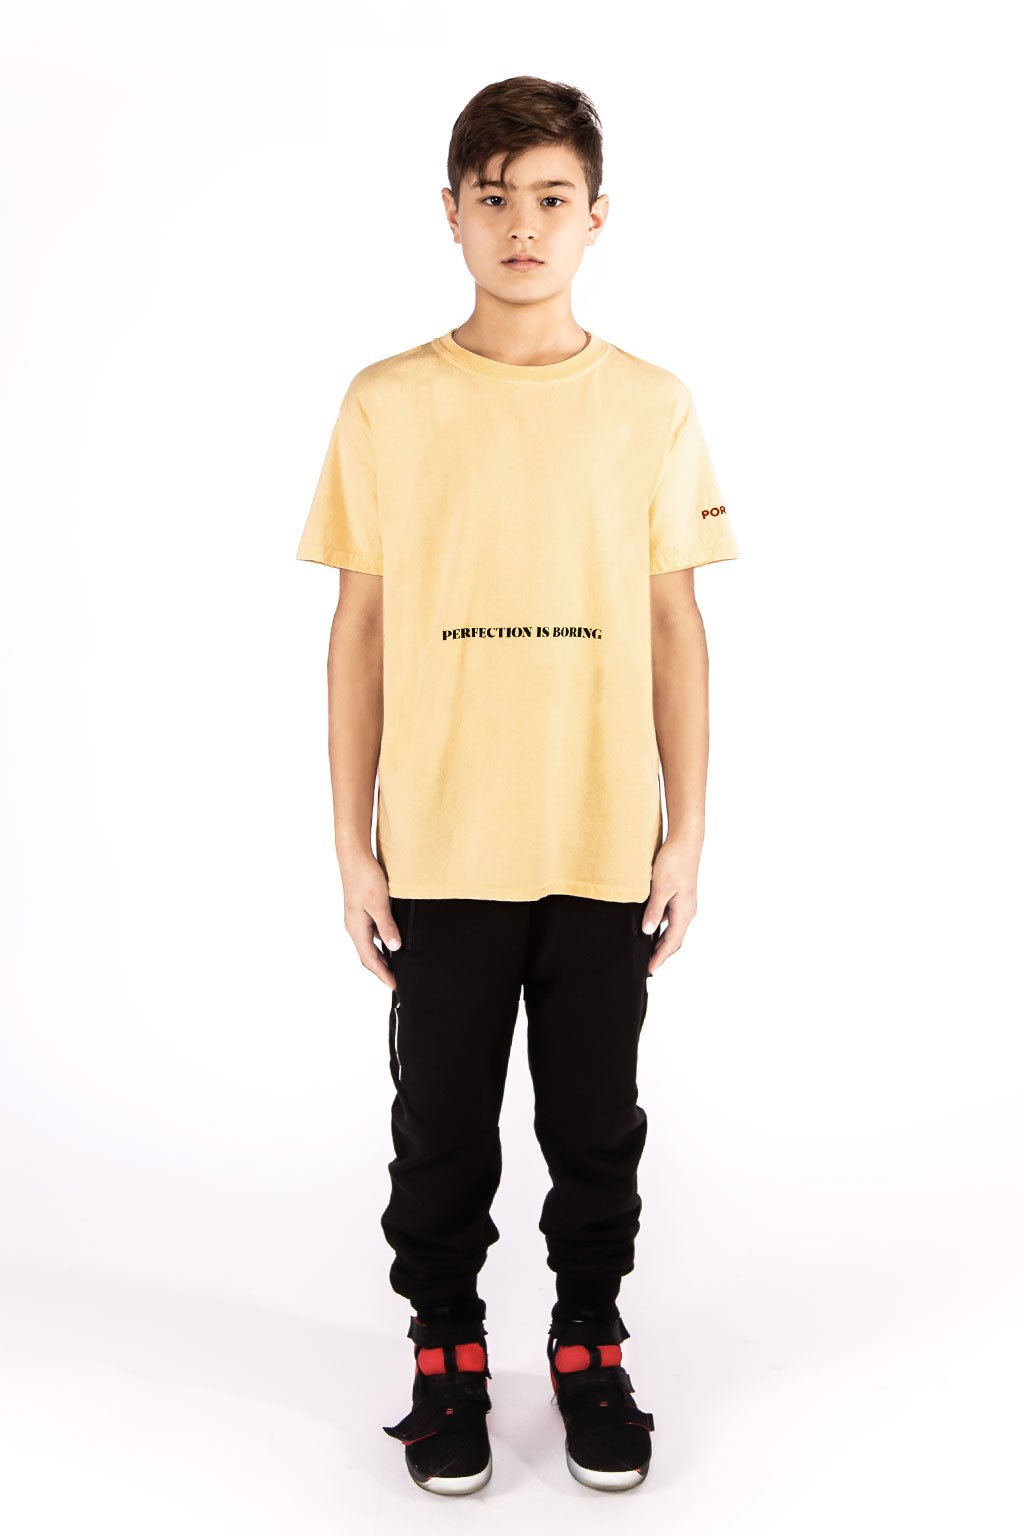 Yellow Perfection T-shirt - Port 213.com 